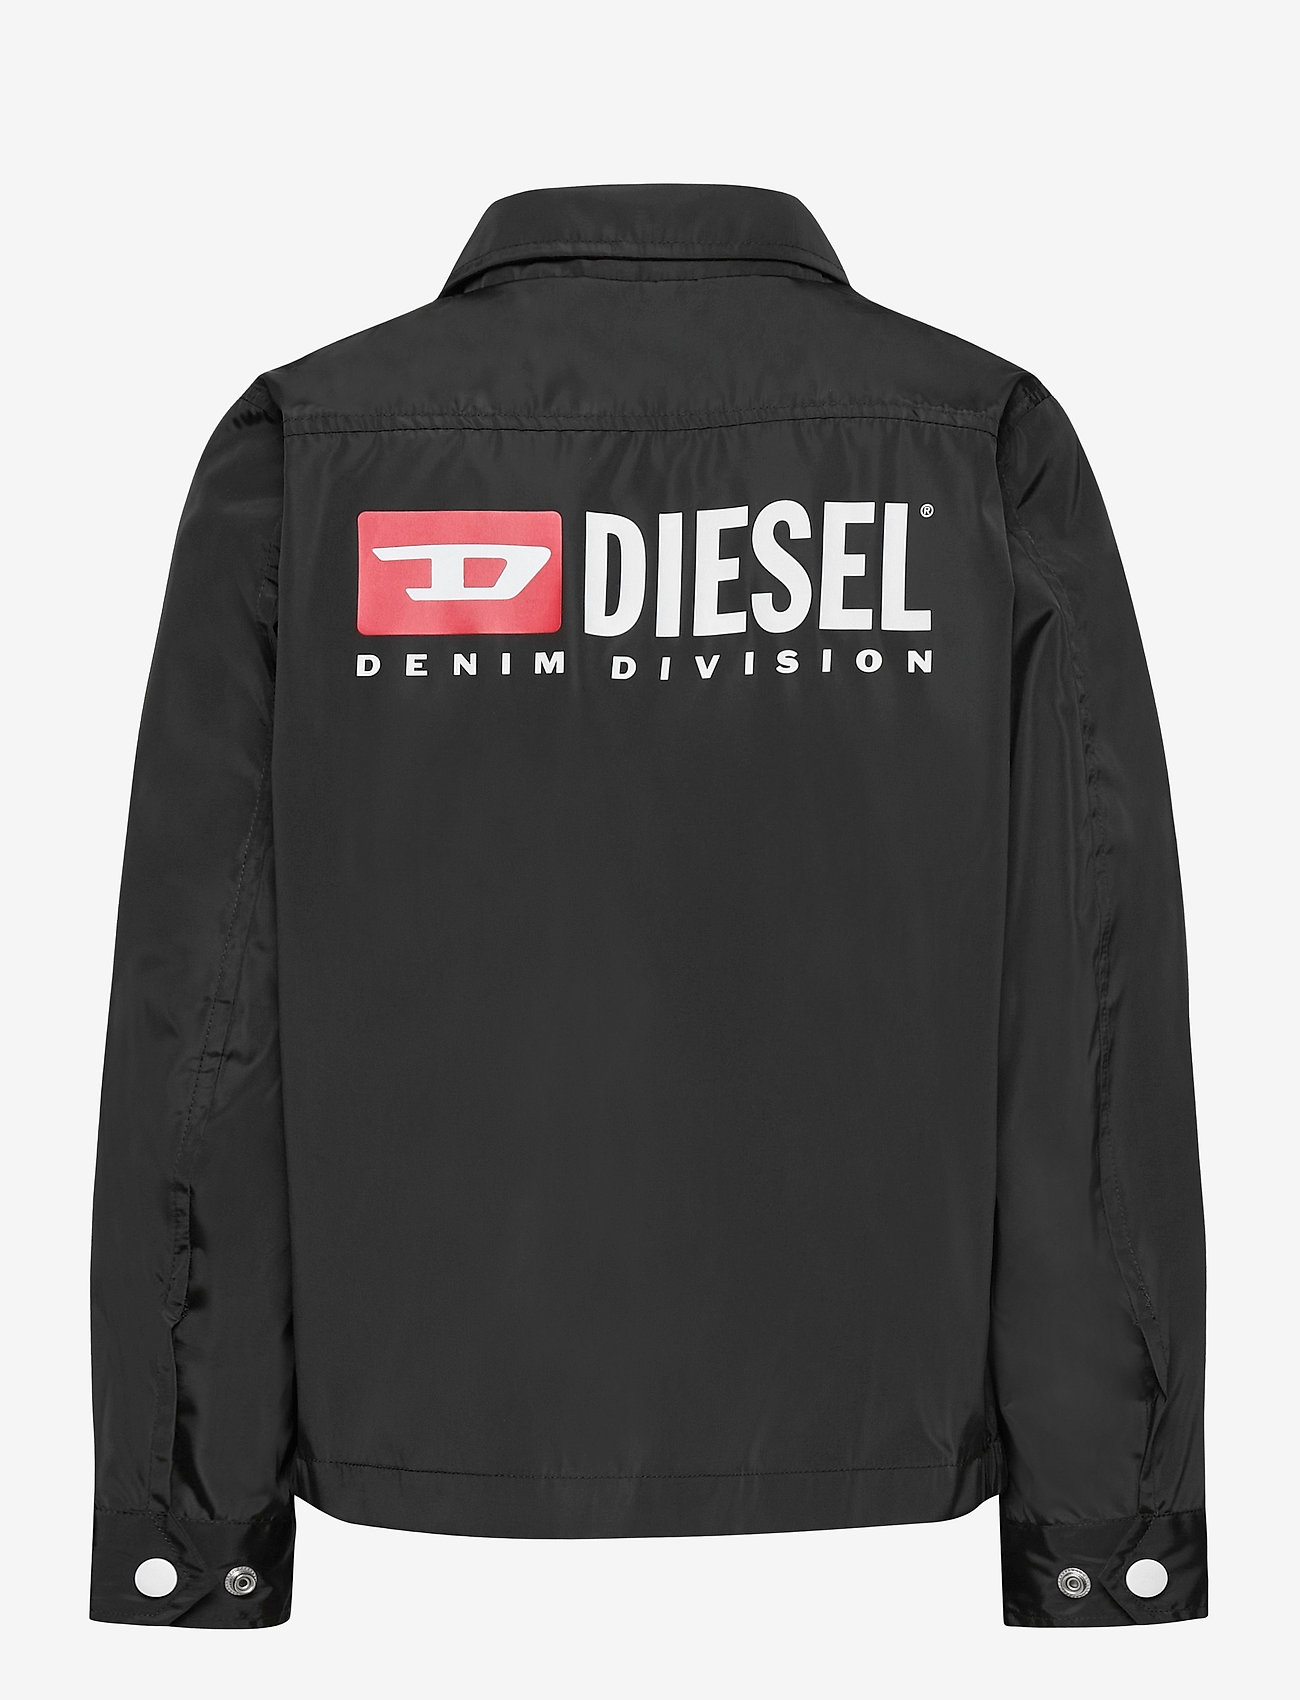 Diesel - JROMANP JACKET - spring jackets - nero - 1